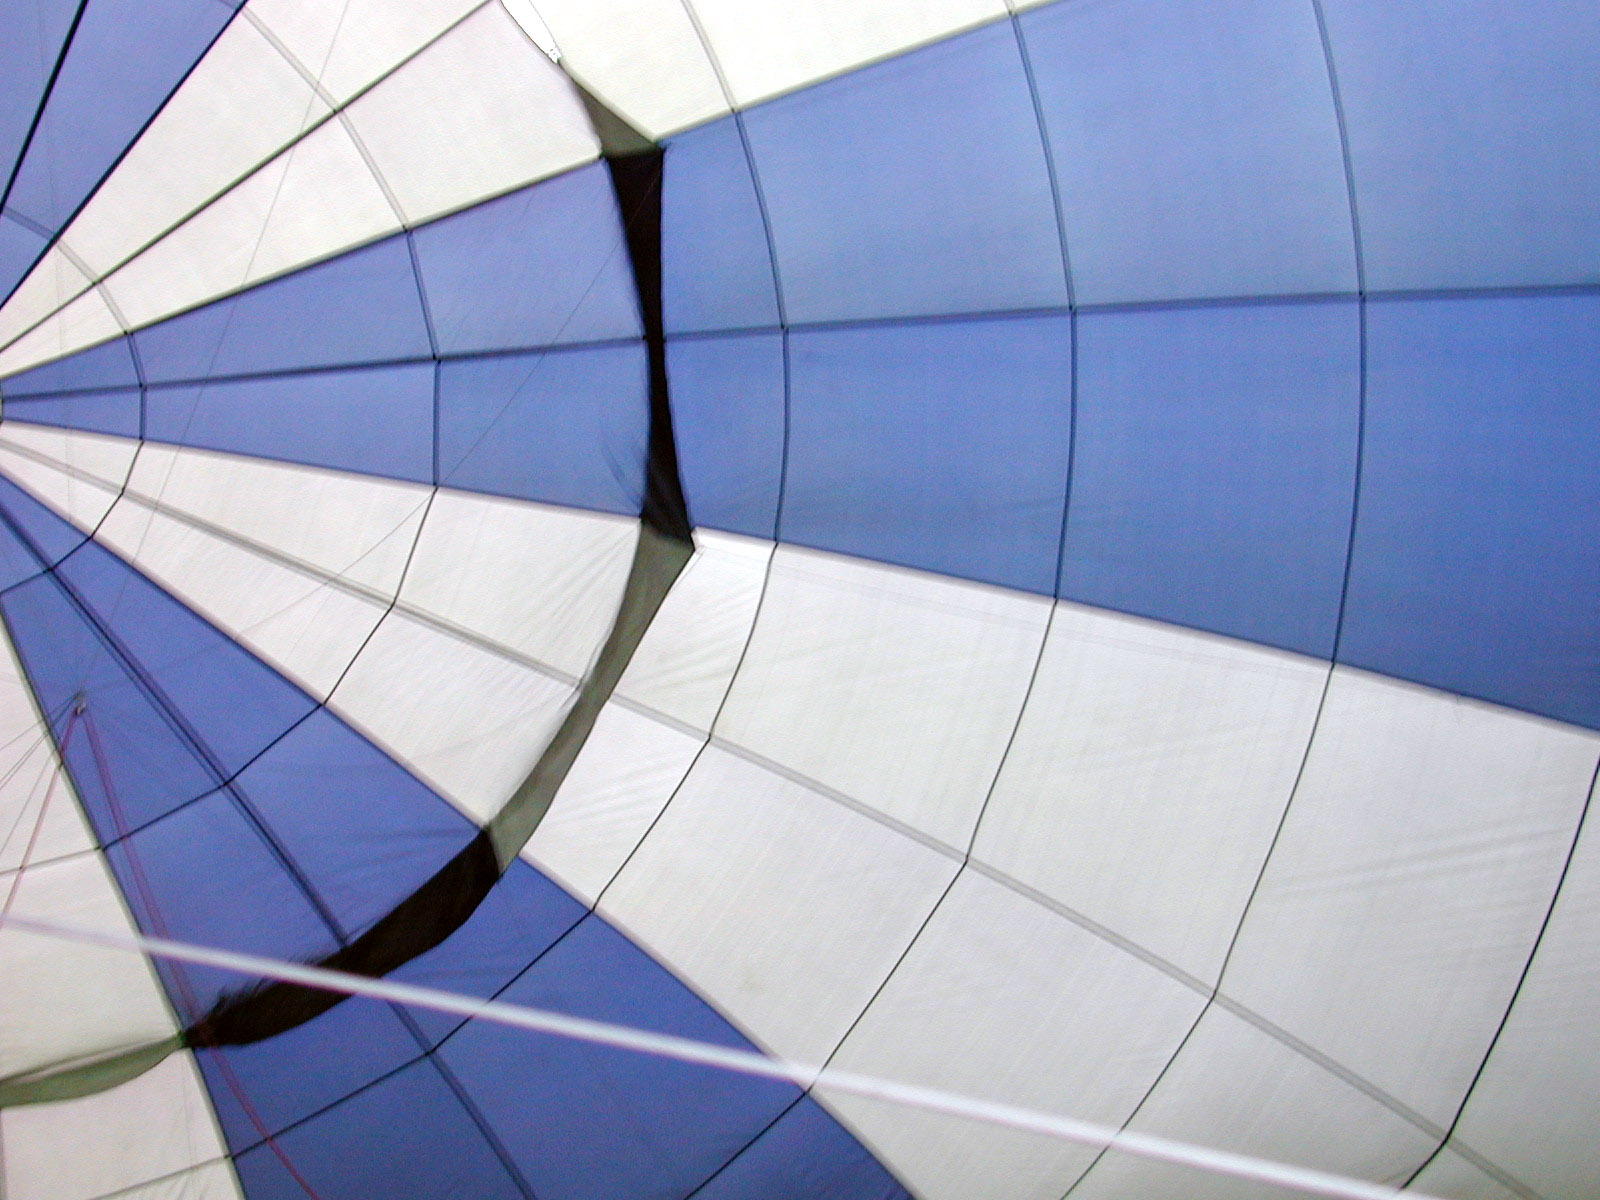 texture vehicles air hotairballoon balloon ballooning cloth textures silk polyester string strings web blue white trapezium inside